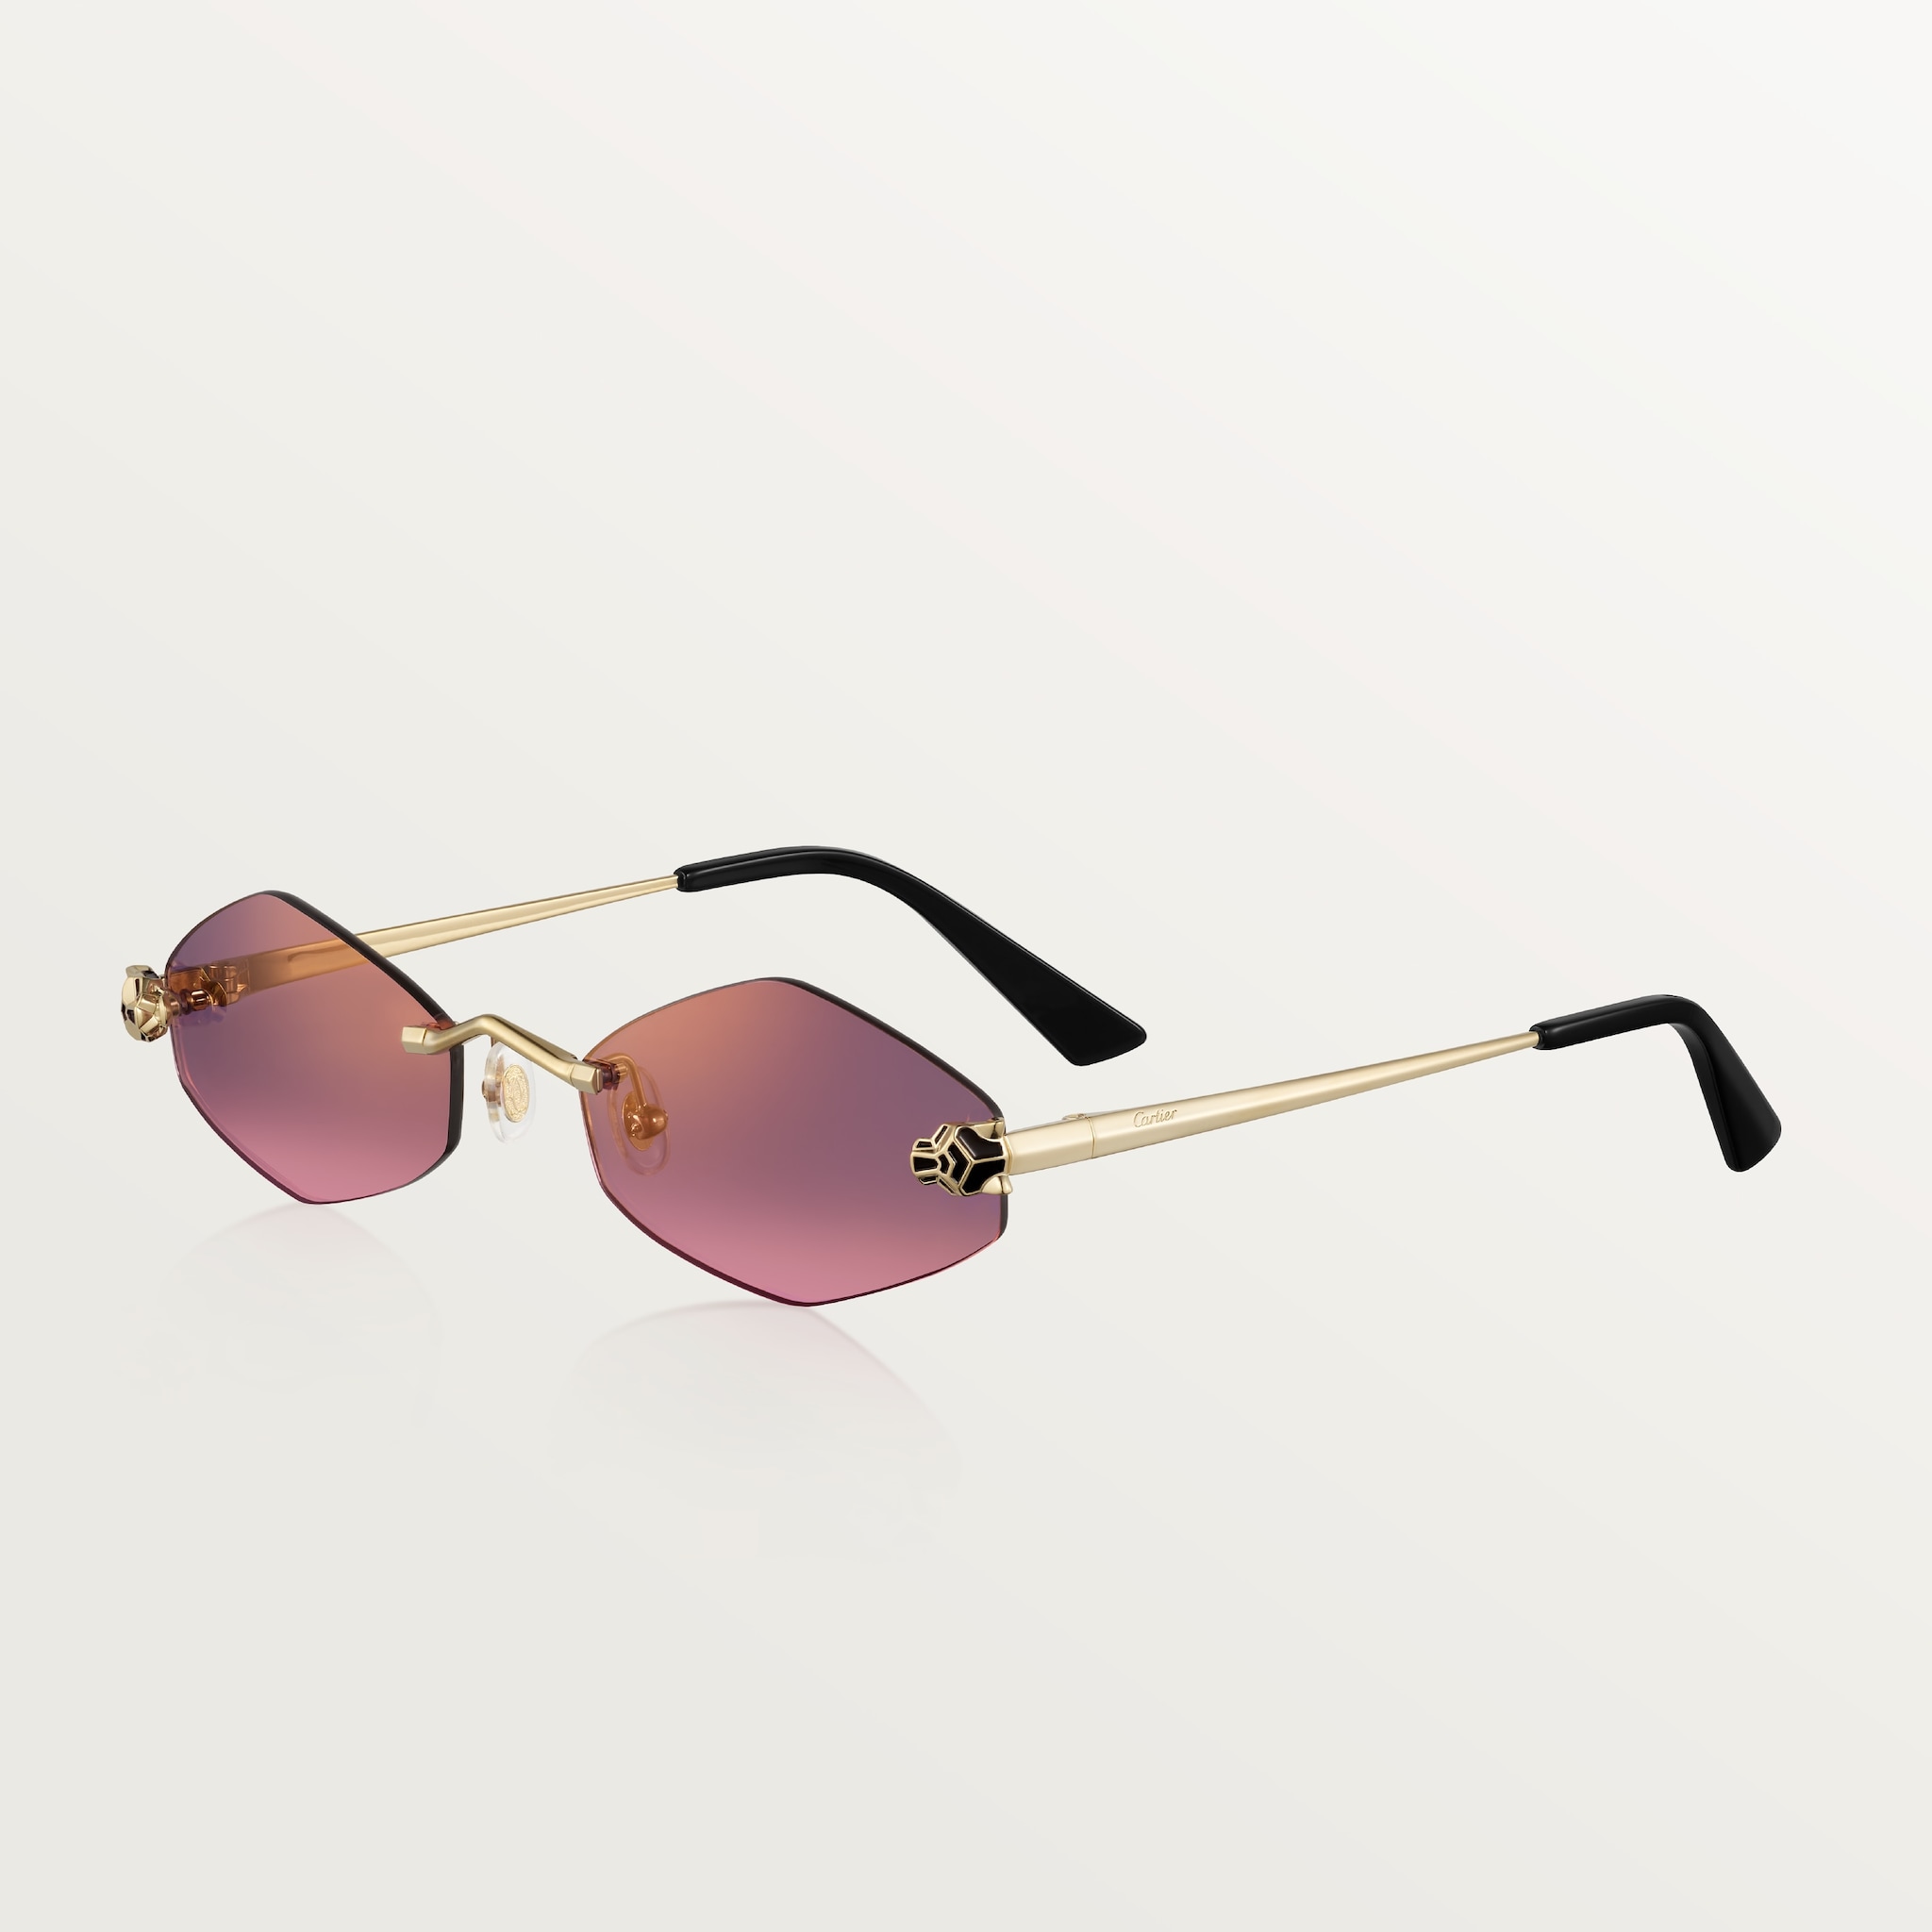 Panthère de Cartier sunglassesSmooth golden-finish metal, graduated purple lenses